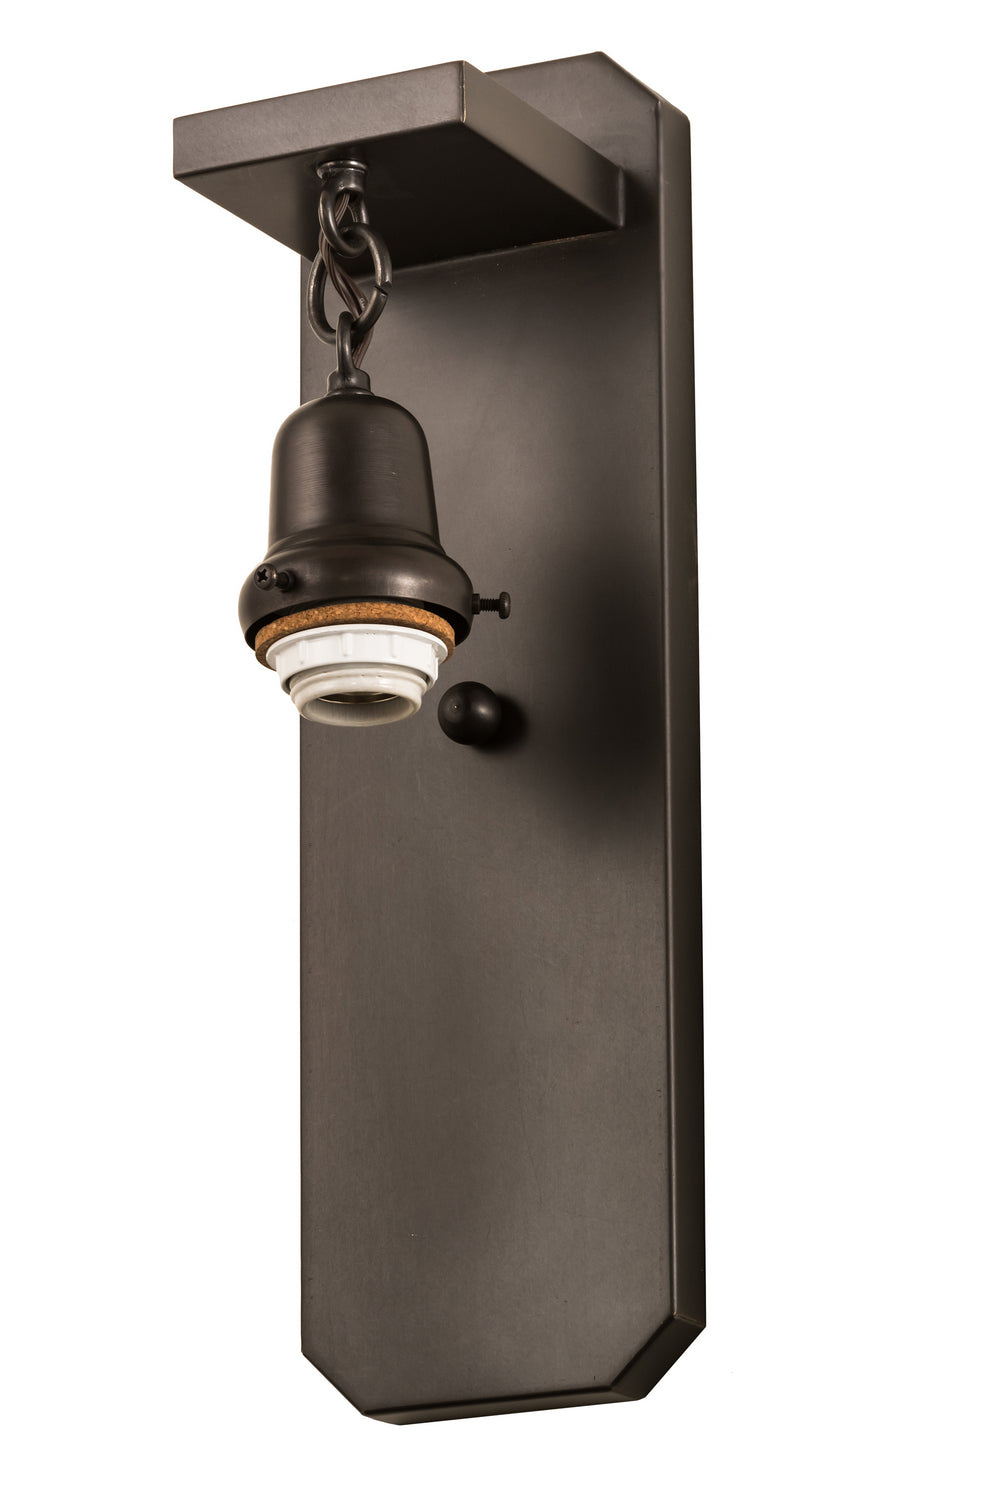 Meyda Tiffany Lighting 117286 Ean One Light Wall Sconce Utility Light Bronze / Dark